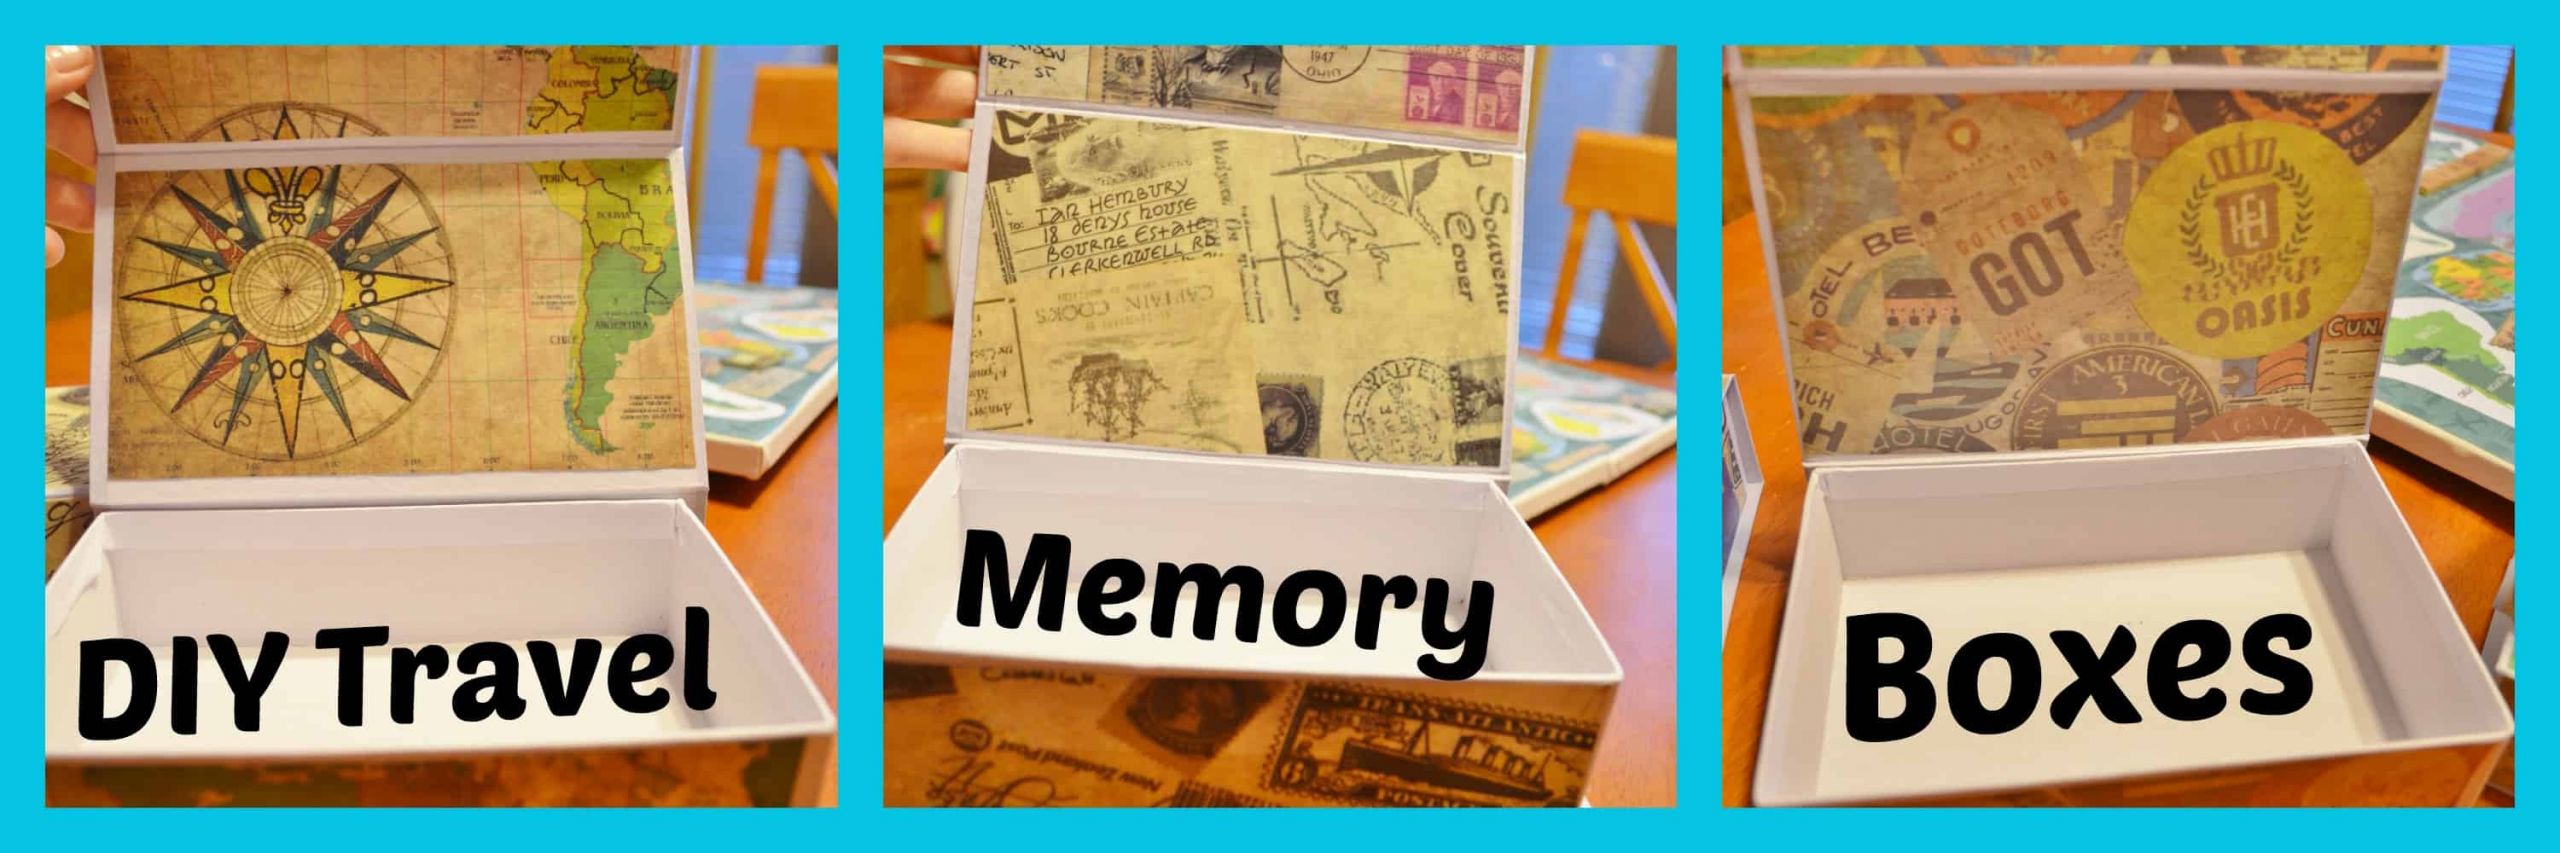 DIY Memory Boxes
 DIY Mod Podge Memory Boxes & Travel Memory Map Project